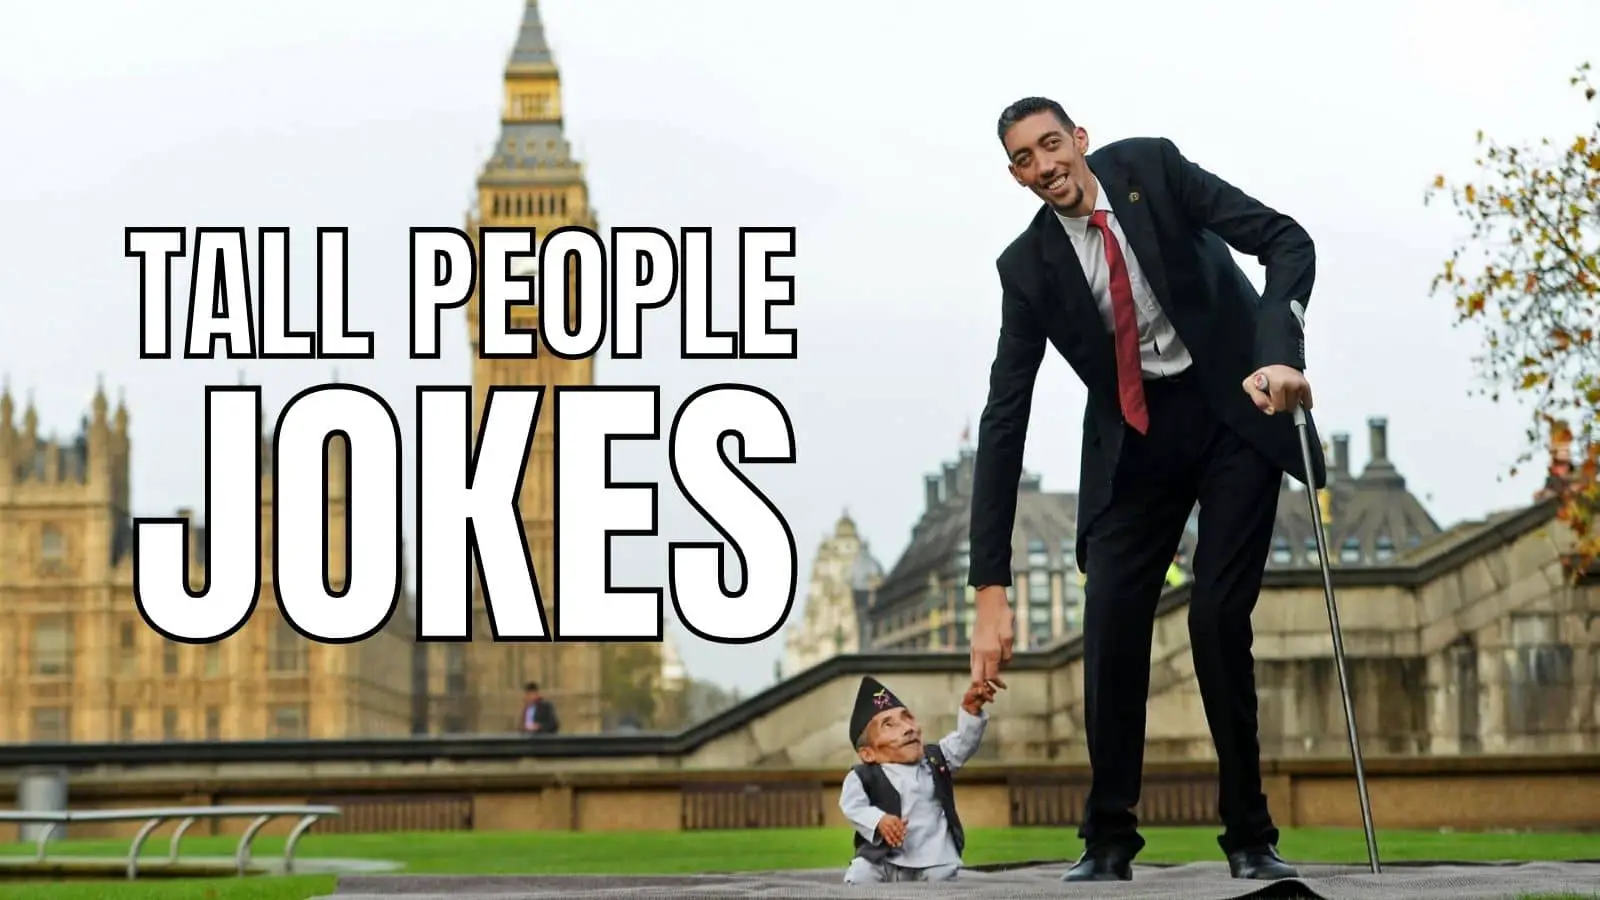 Tall People Jokes on Person